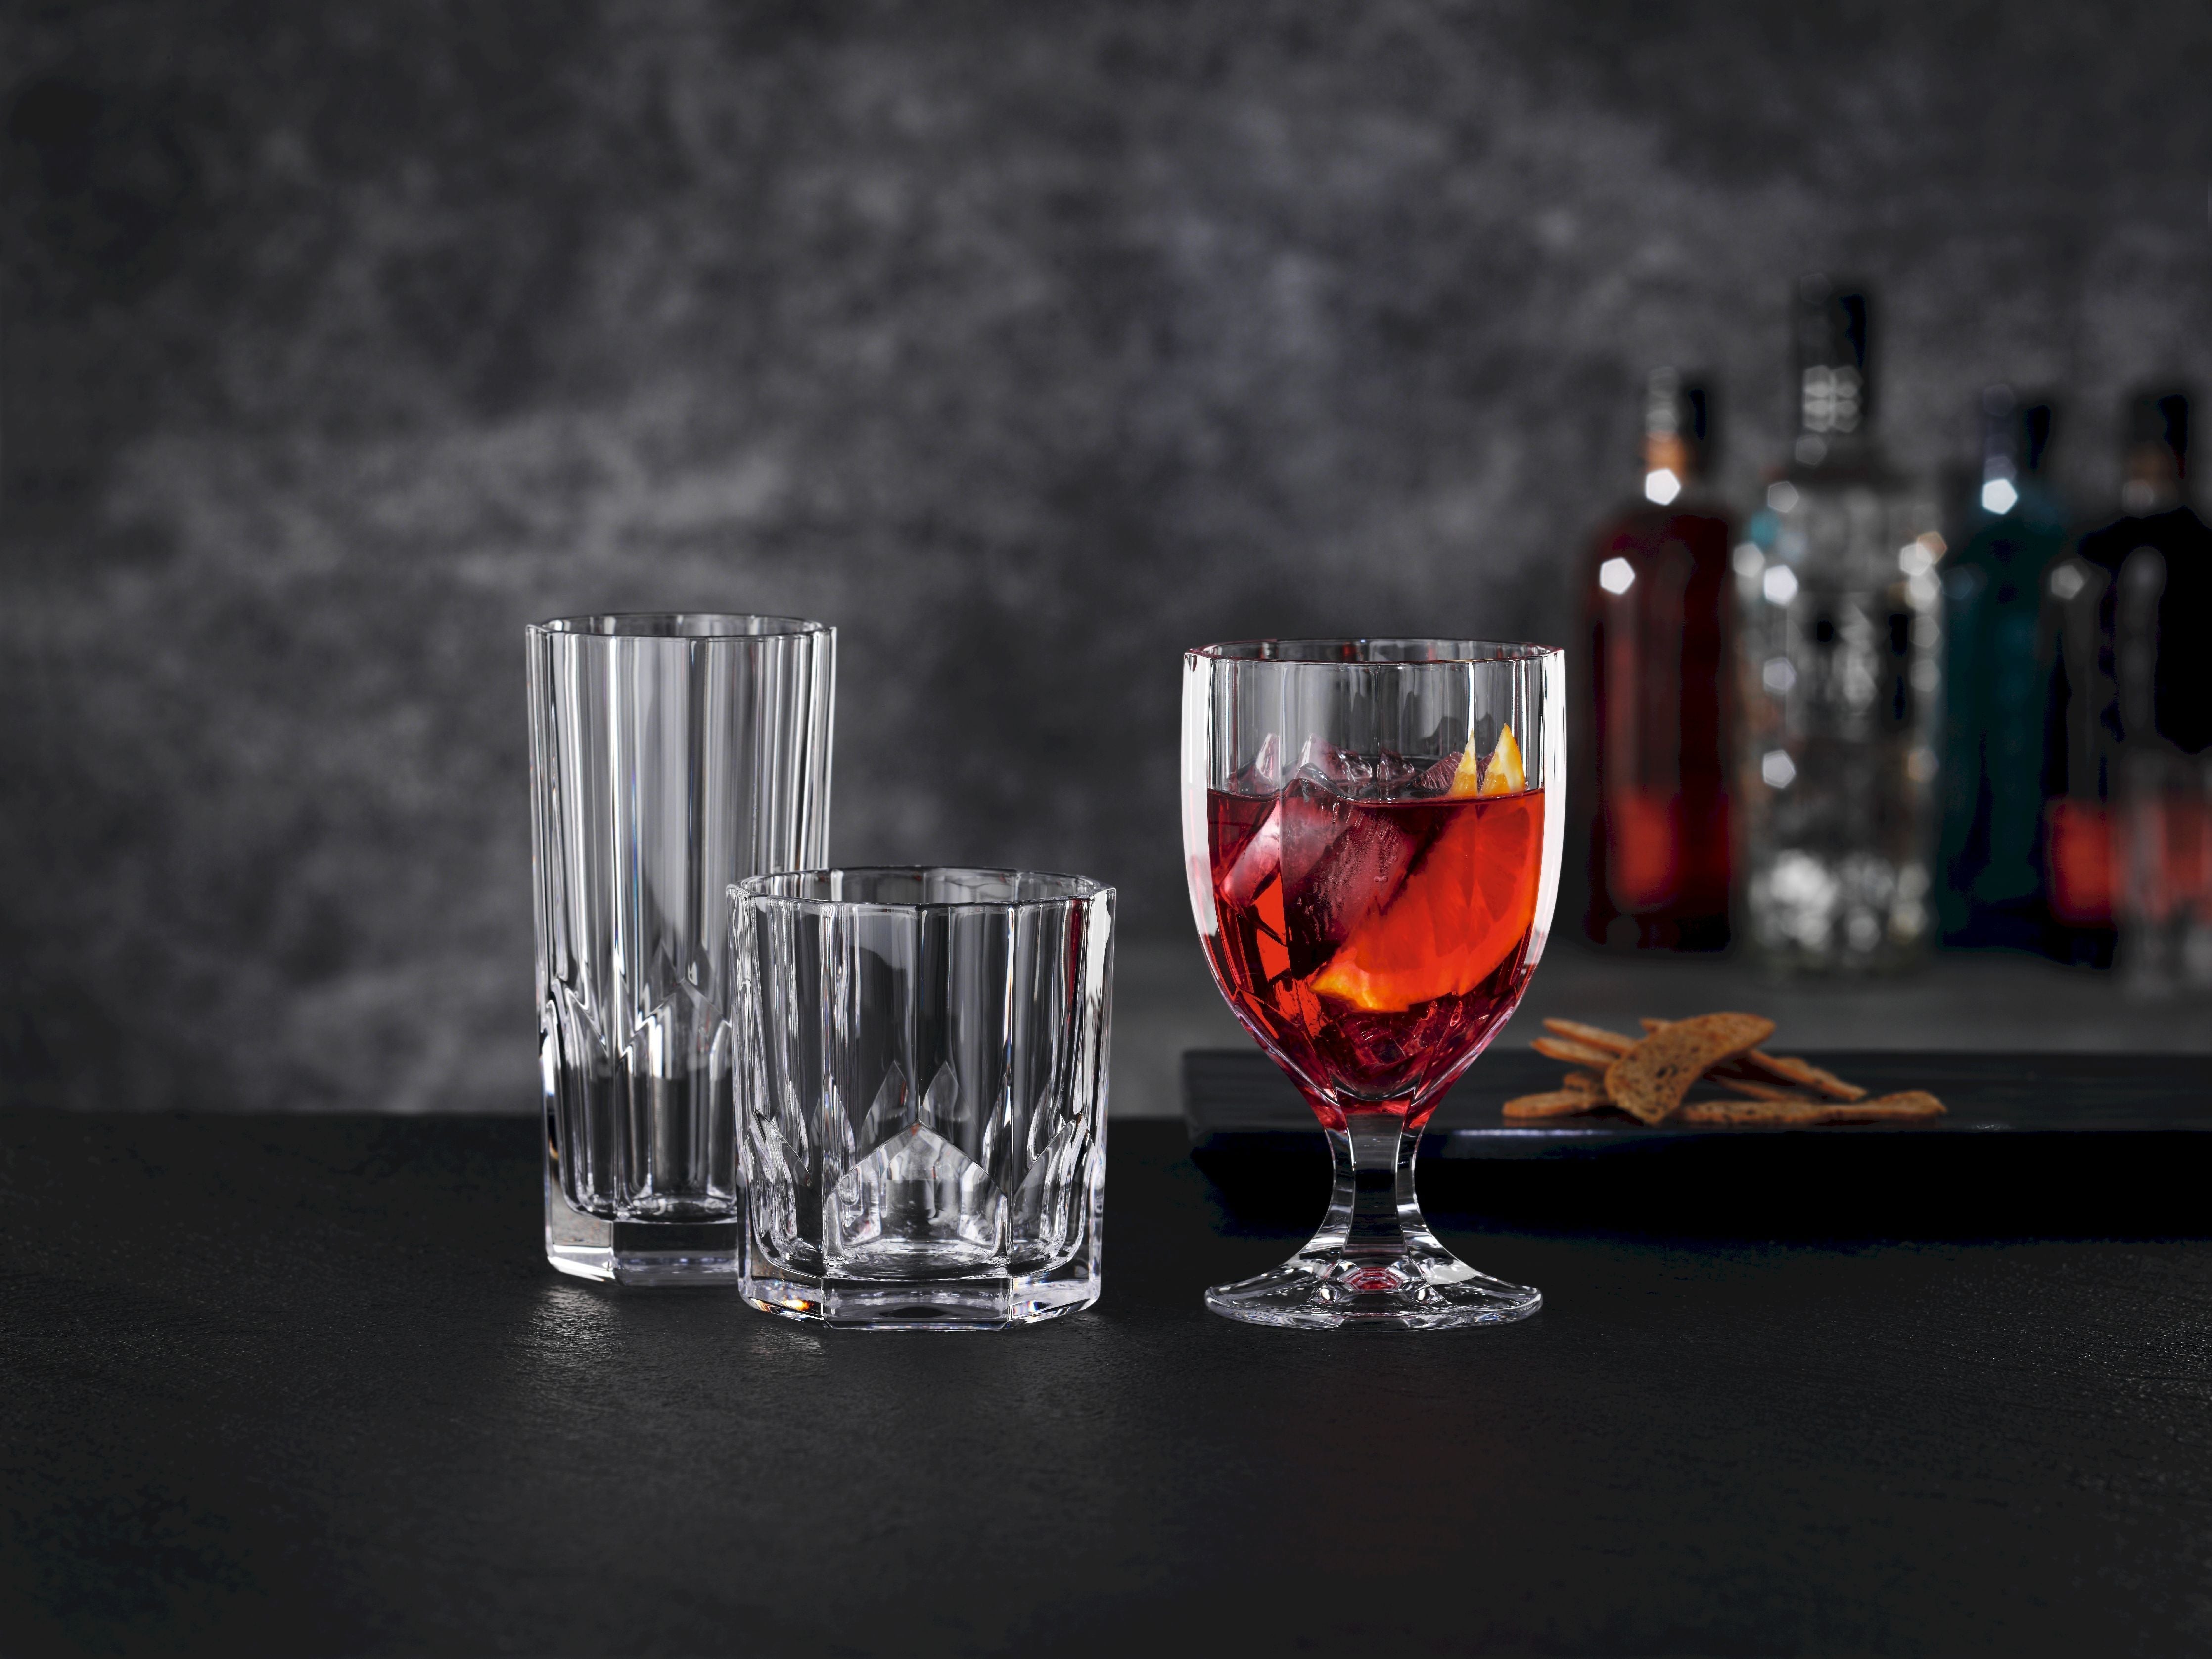 Nachtmann Aspen Whiskyglas 324 ml, 4 Stk.